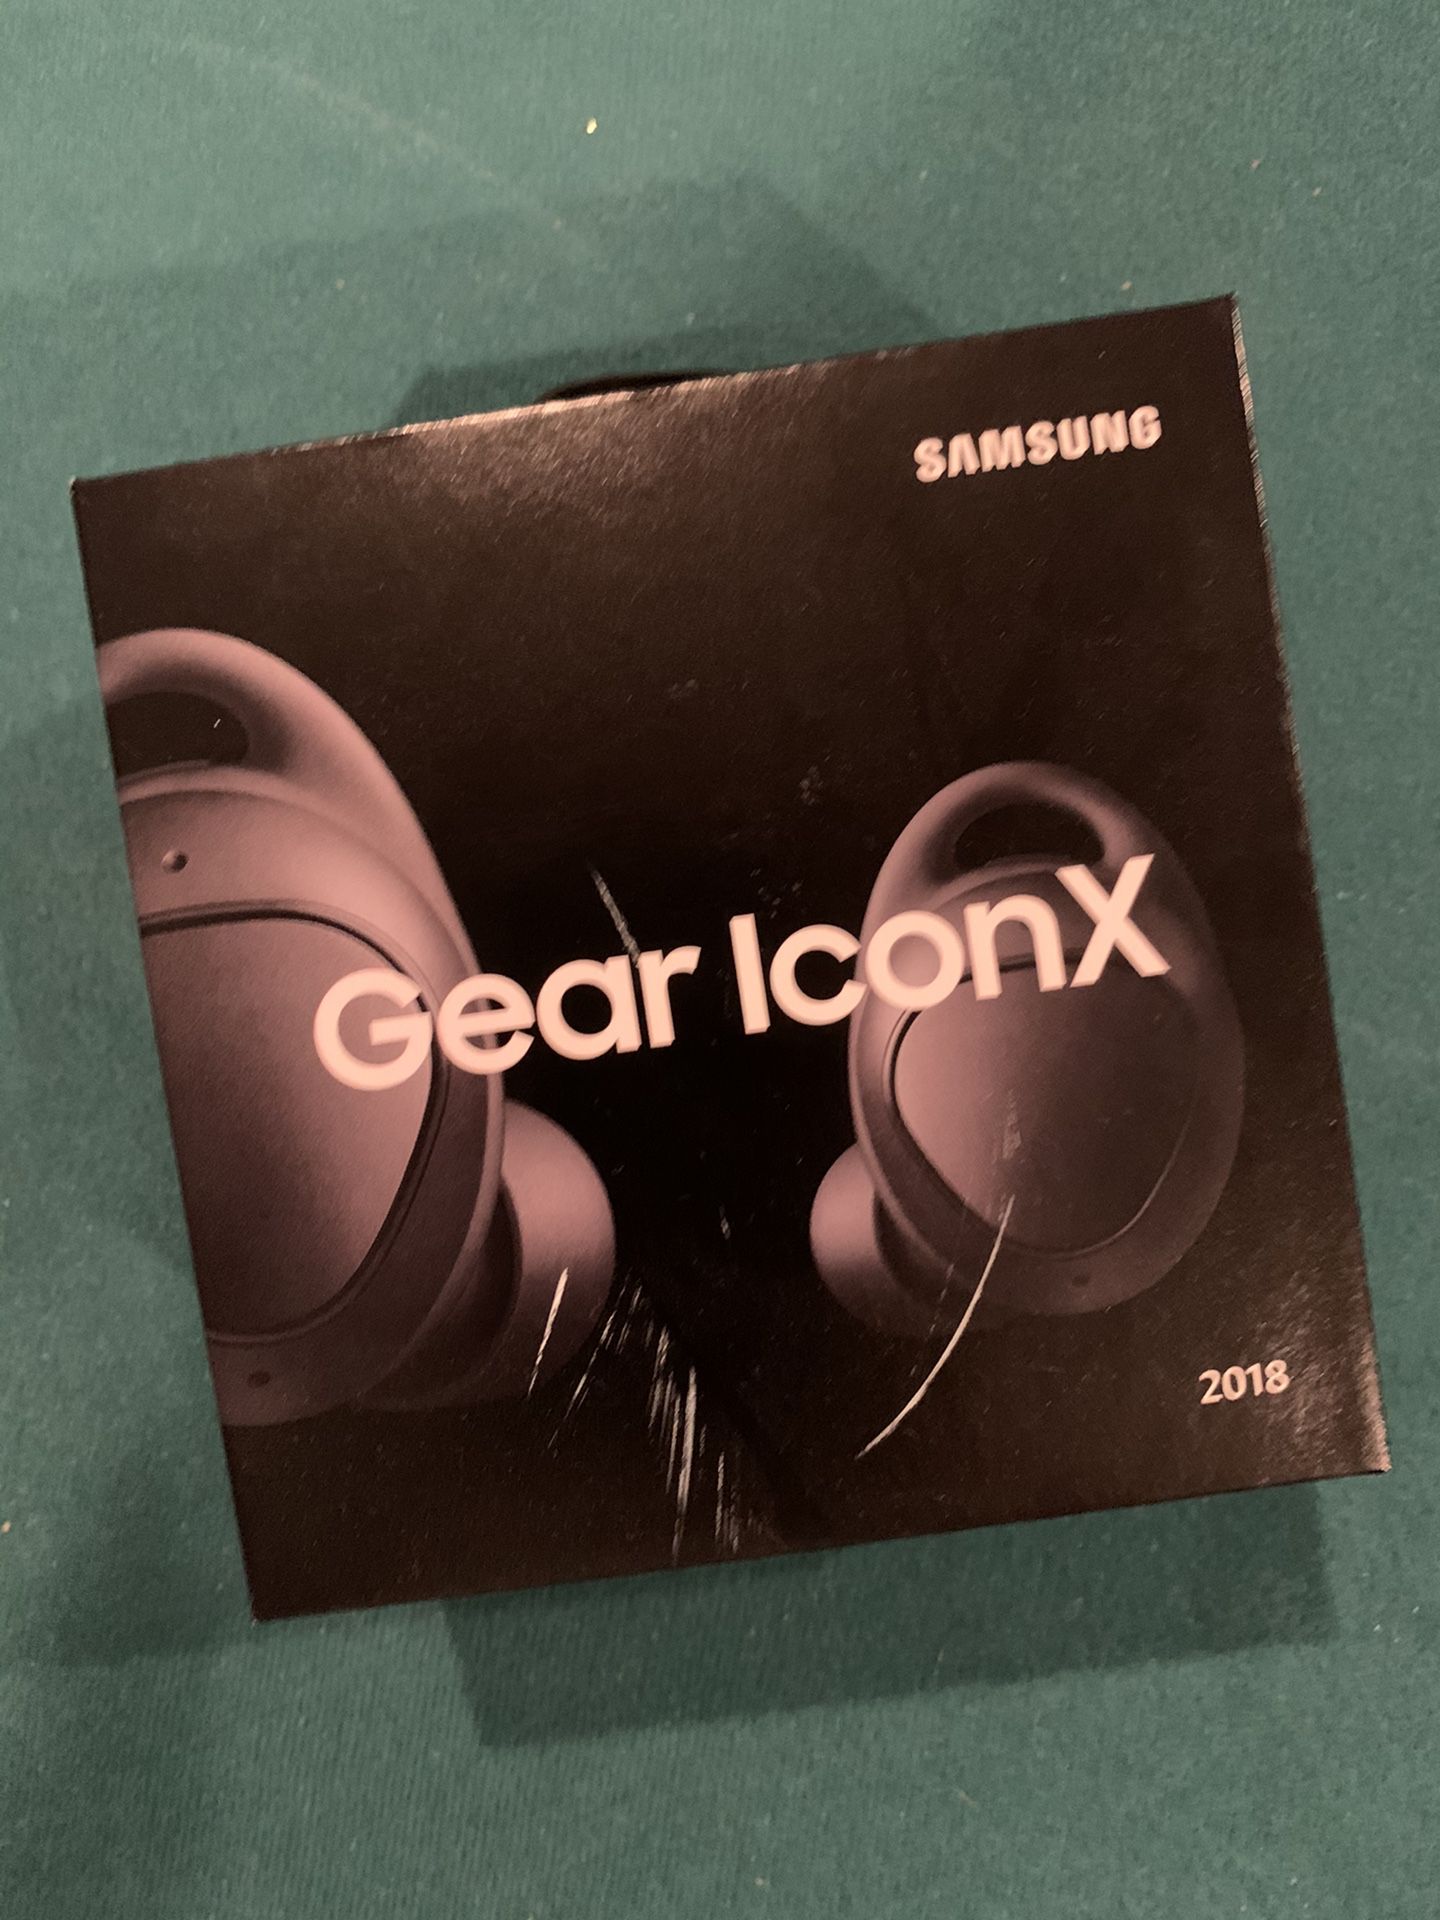 Samsung Gear IconX - 2018